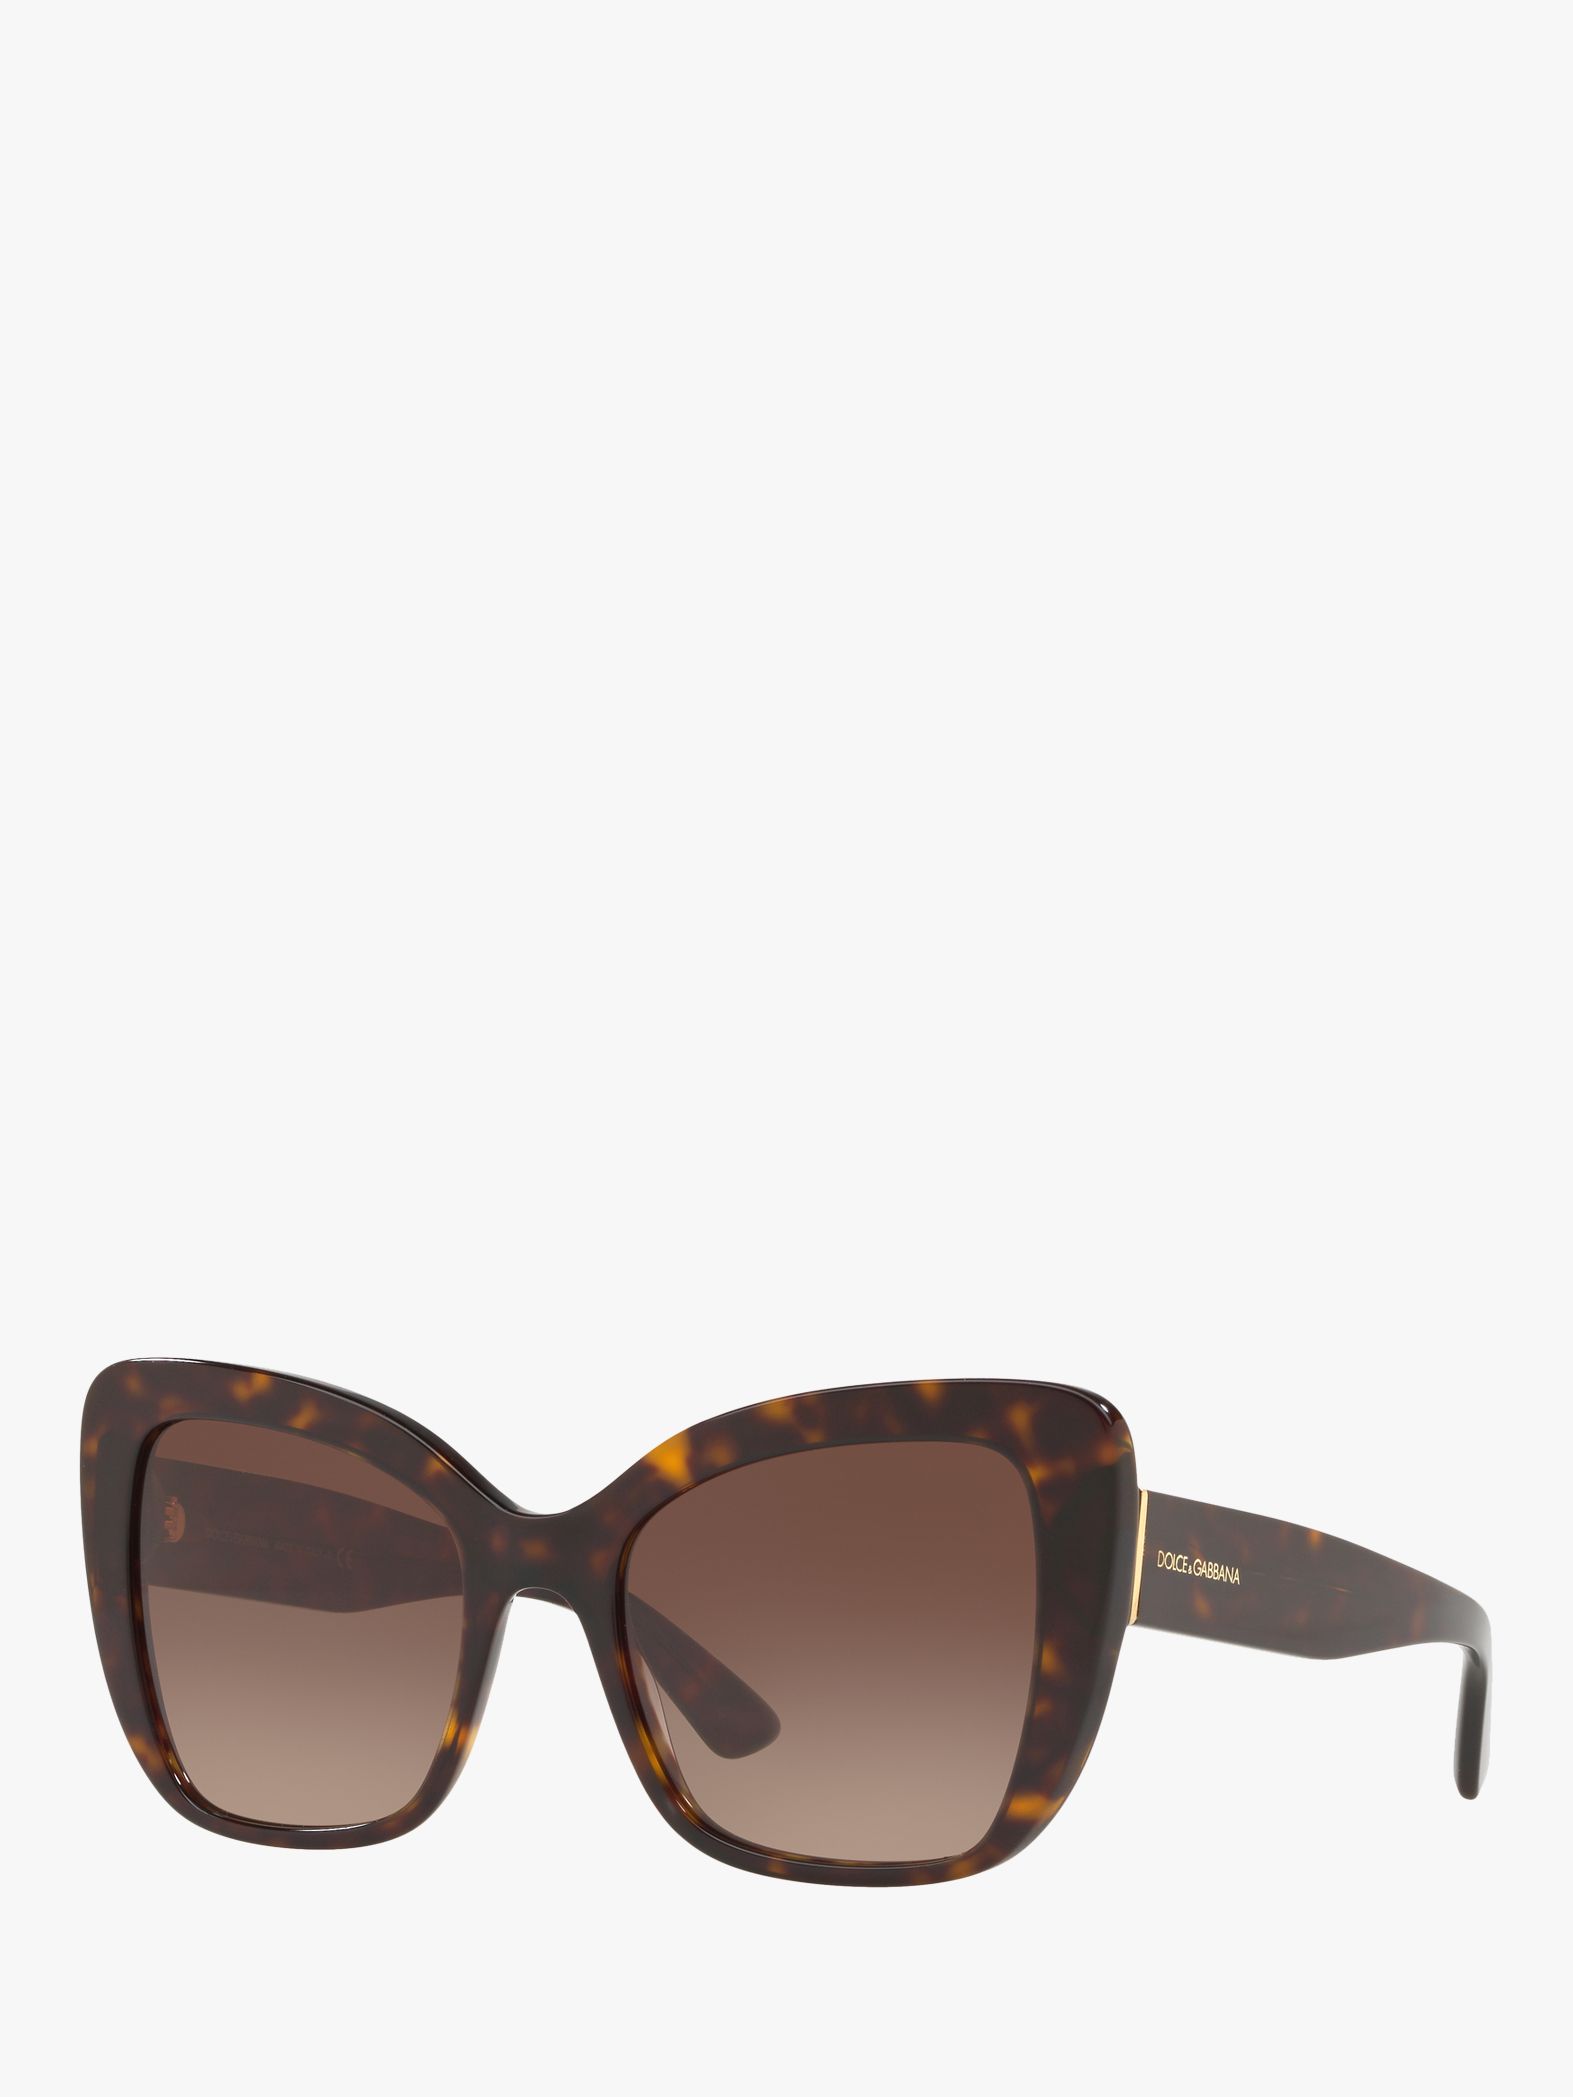 Arriba 58+ imagen dolce and gabbana brown sunglasses